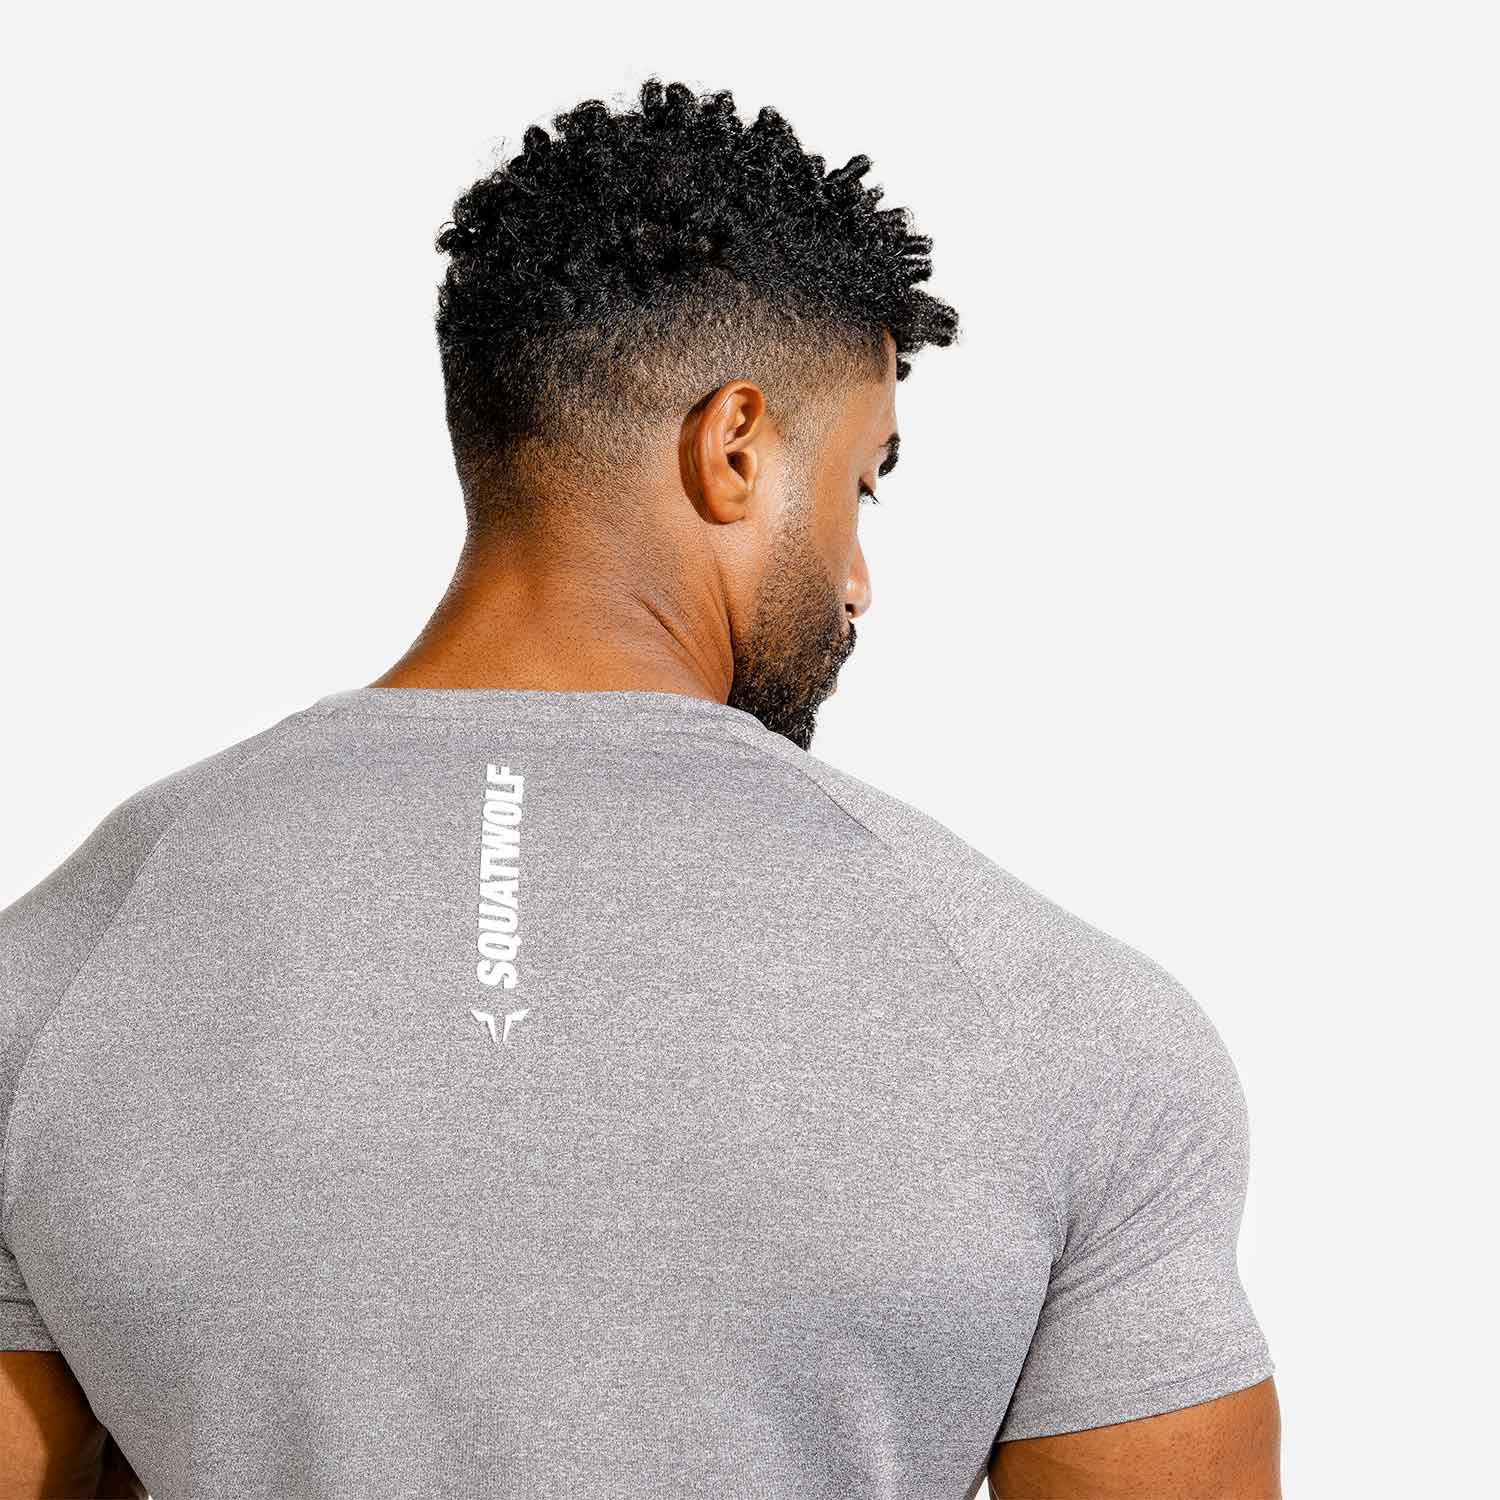 squatwolf-workout-shirts-for-men-melange-tee-light-gray-gym-wear